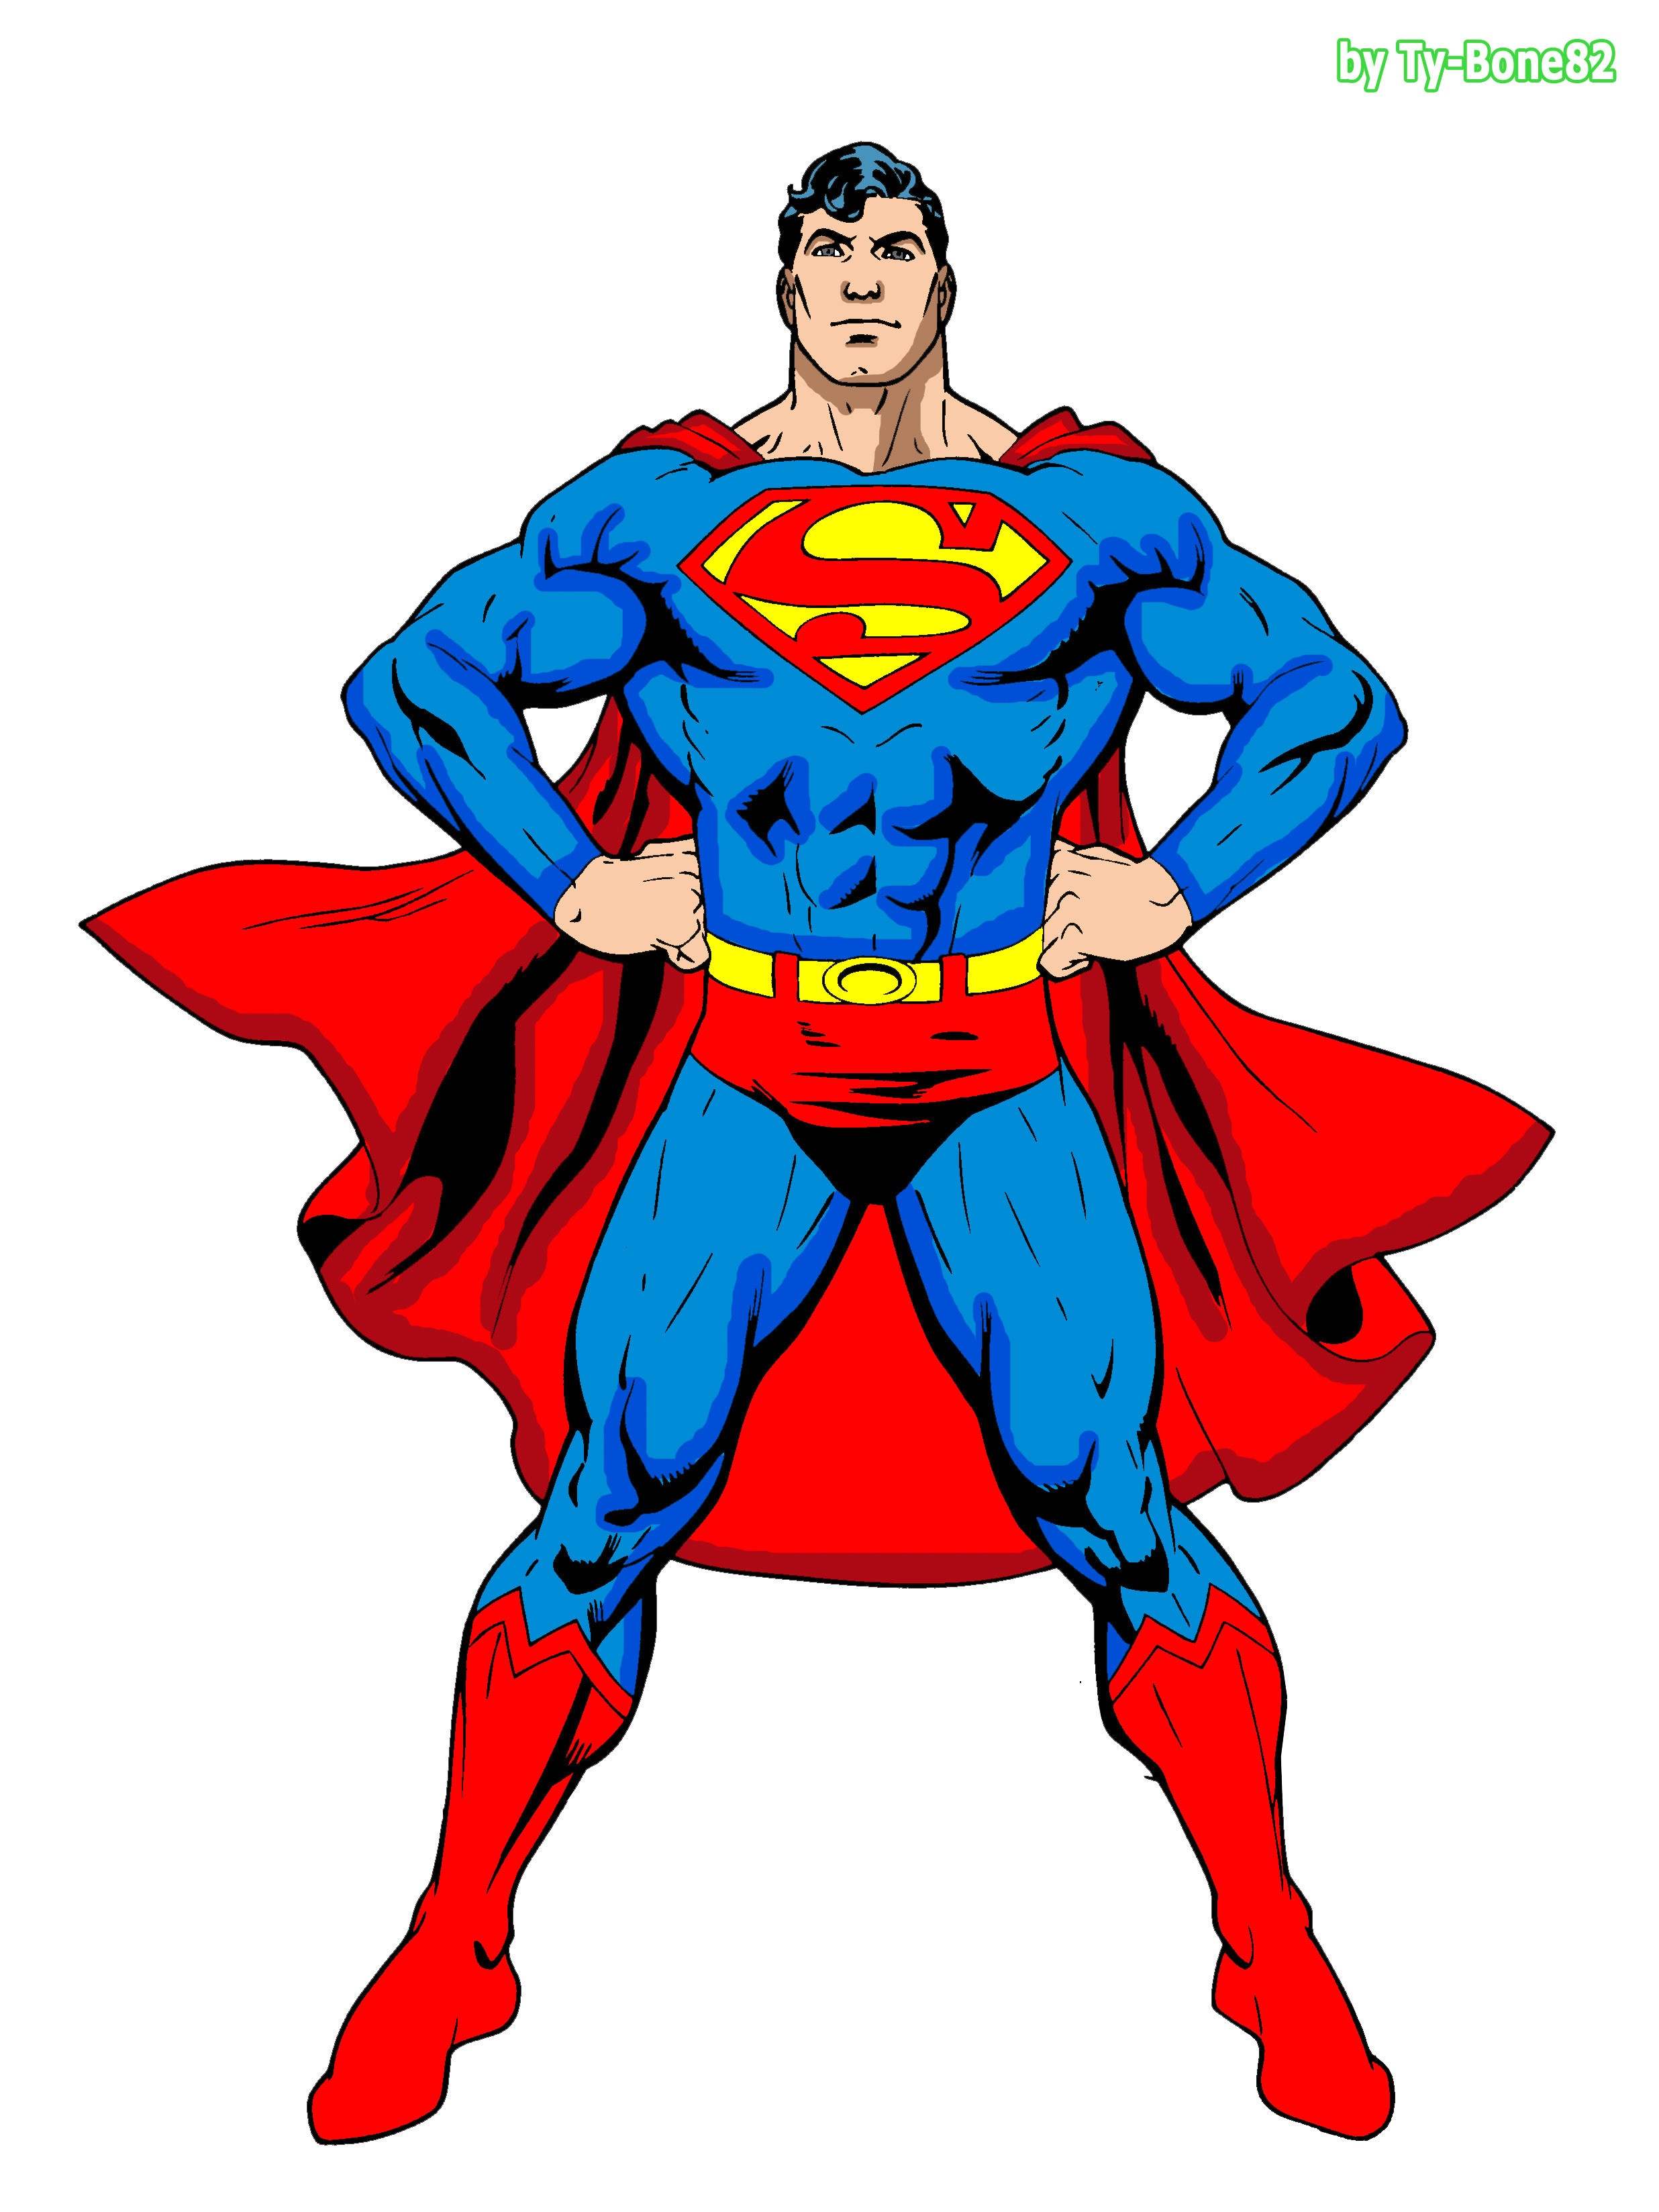 superman__final_color__by_super_tybone82-d859bl8.jpg